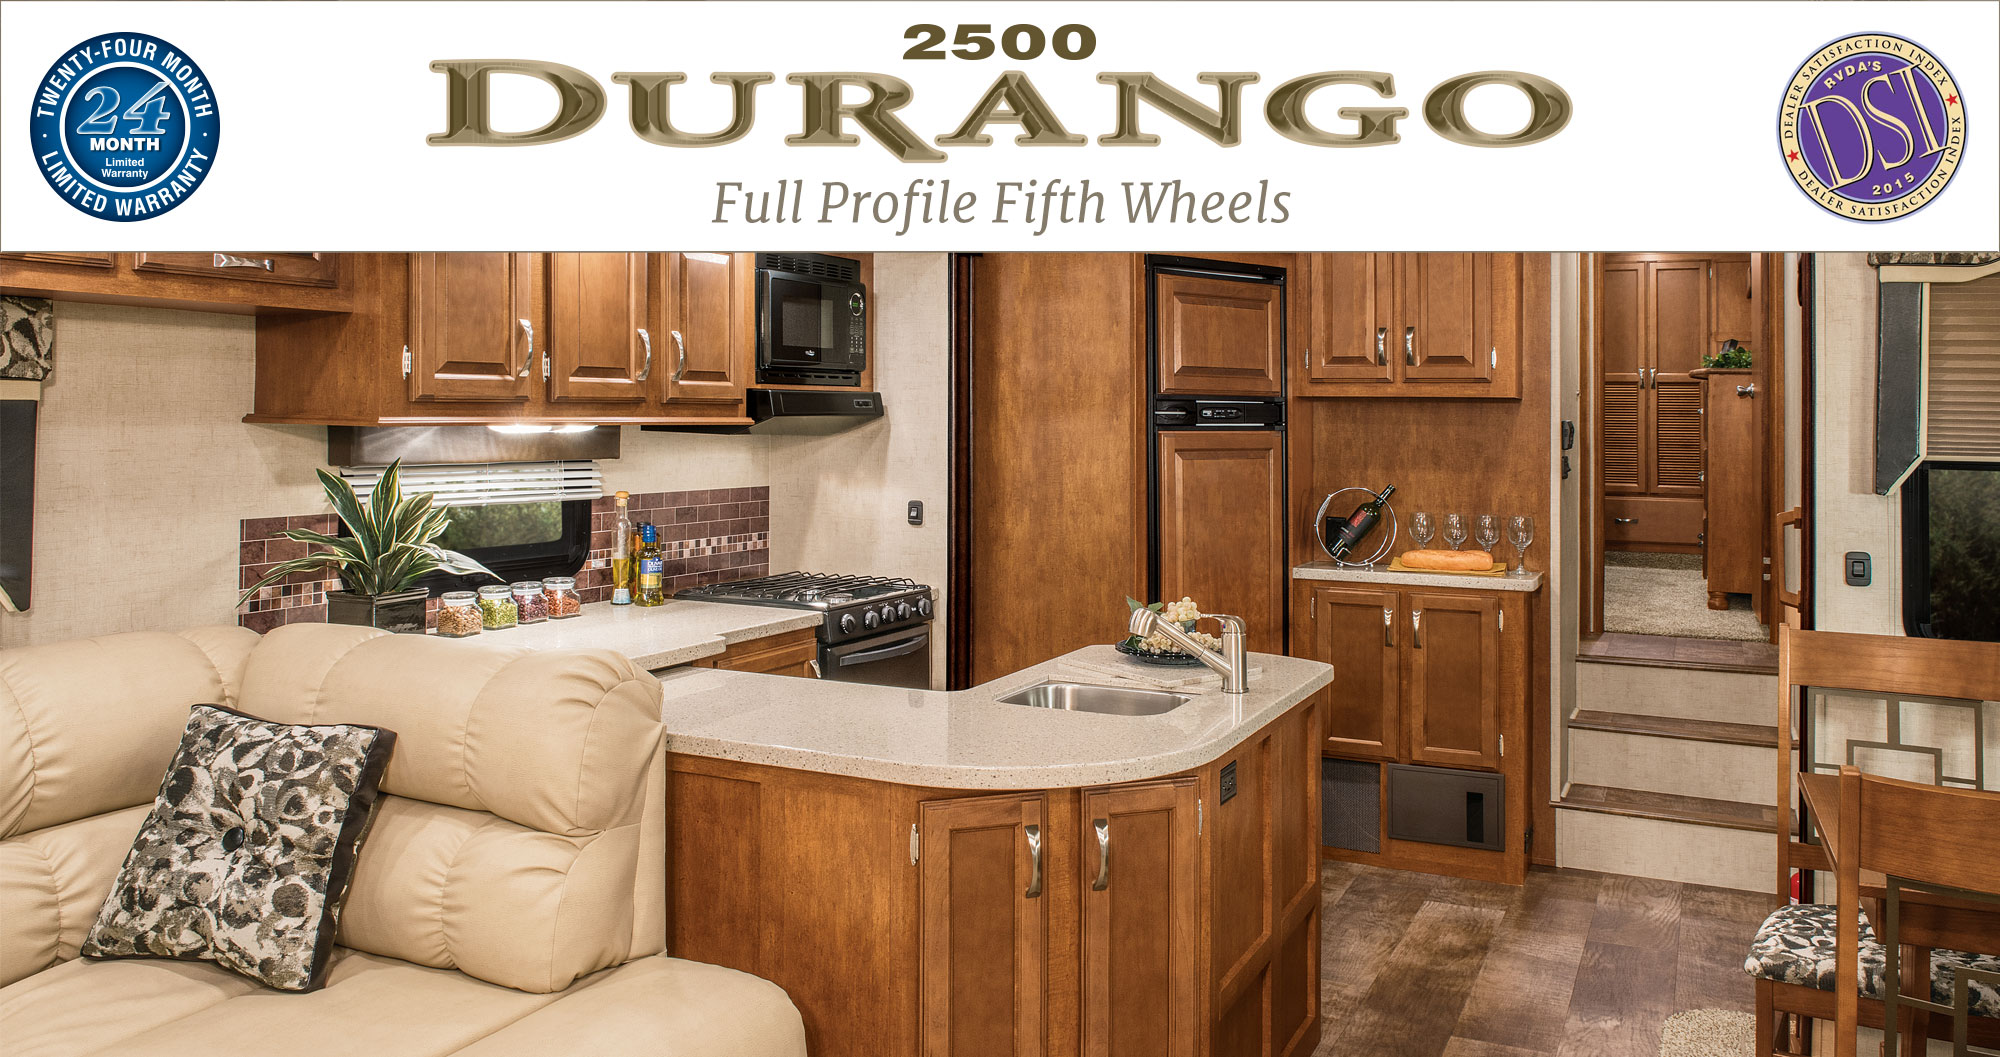 KZ RV Durango 2500 Full Profile Fifth Wheels Introduction